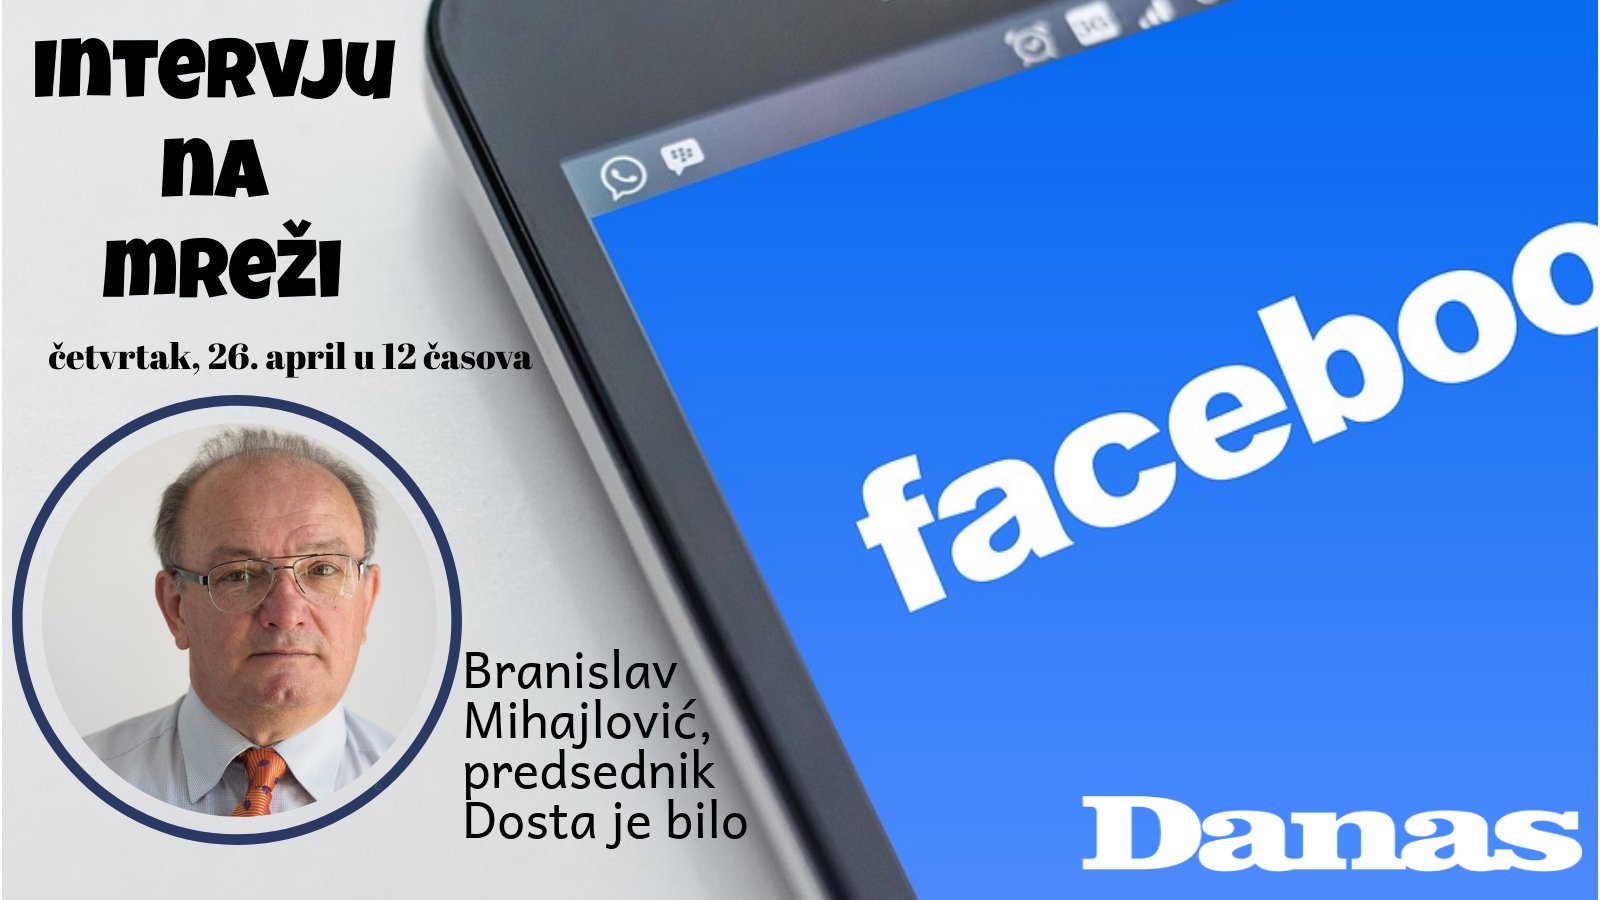 Novi predsednik DJB 26. aprila odgovara na Fejsbuku 1